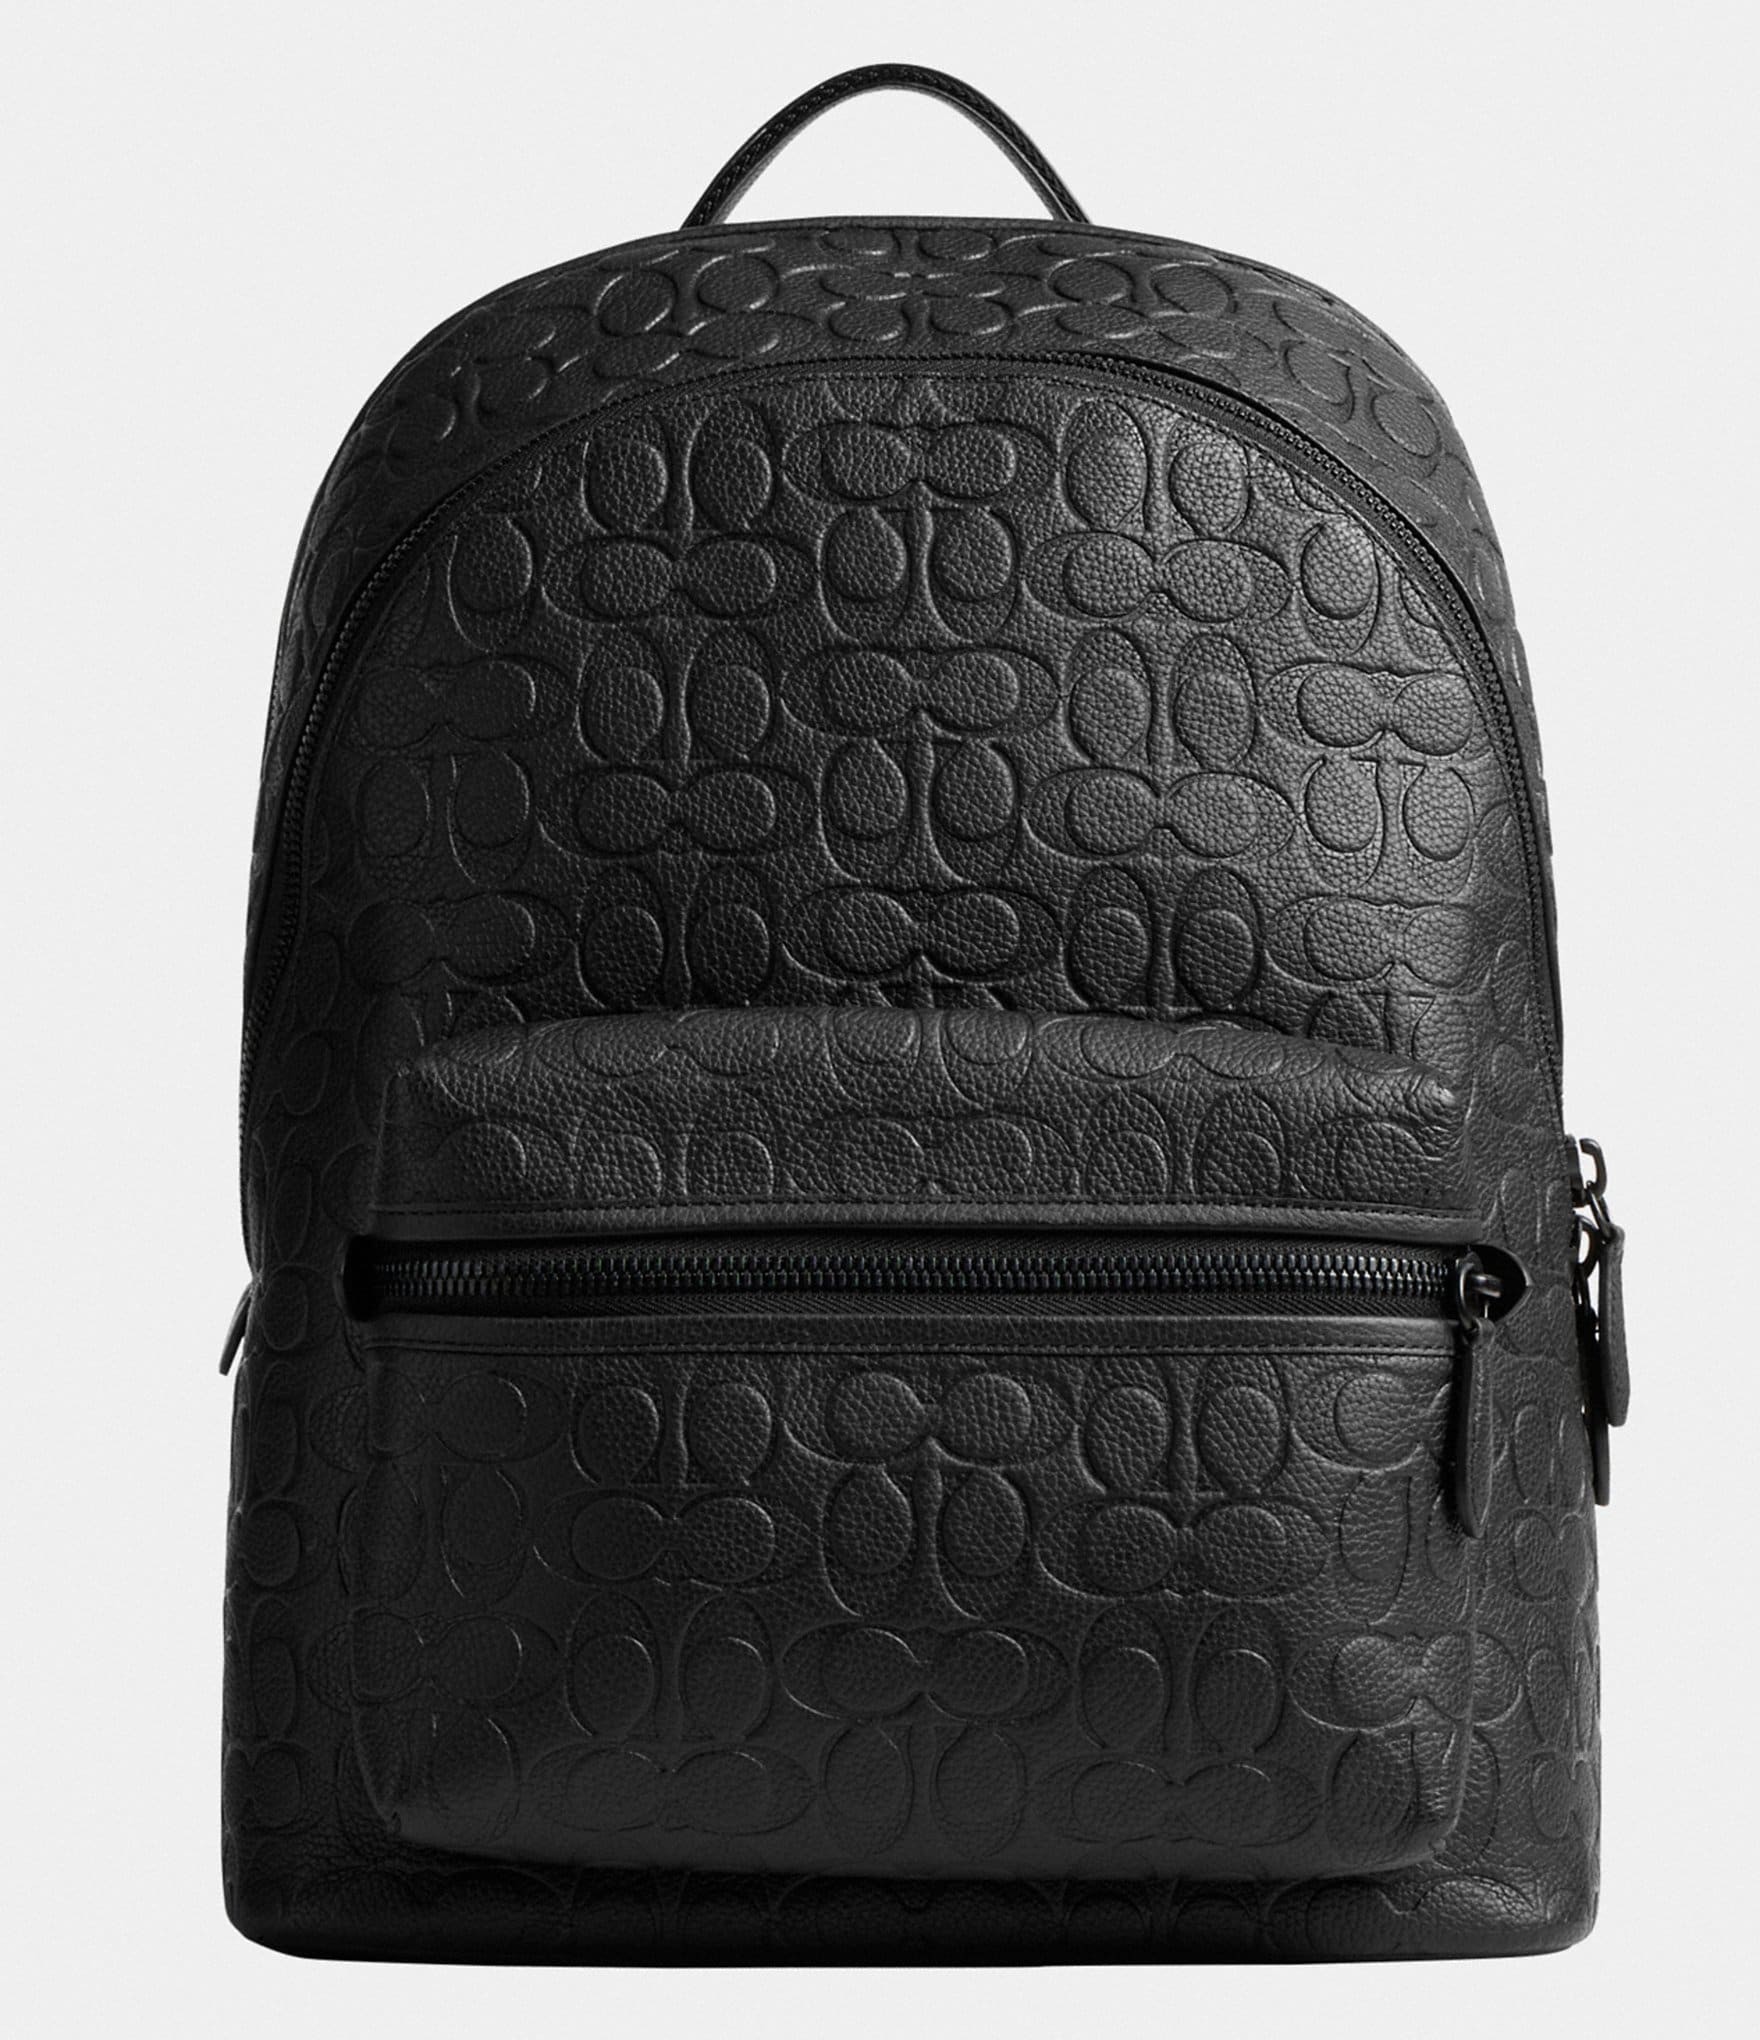 COACH Charter Signature Polished Pebble Leather Backpack | Dillard's